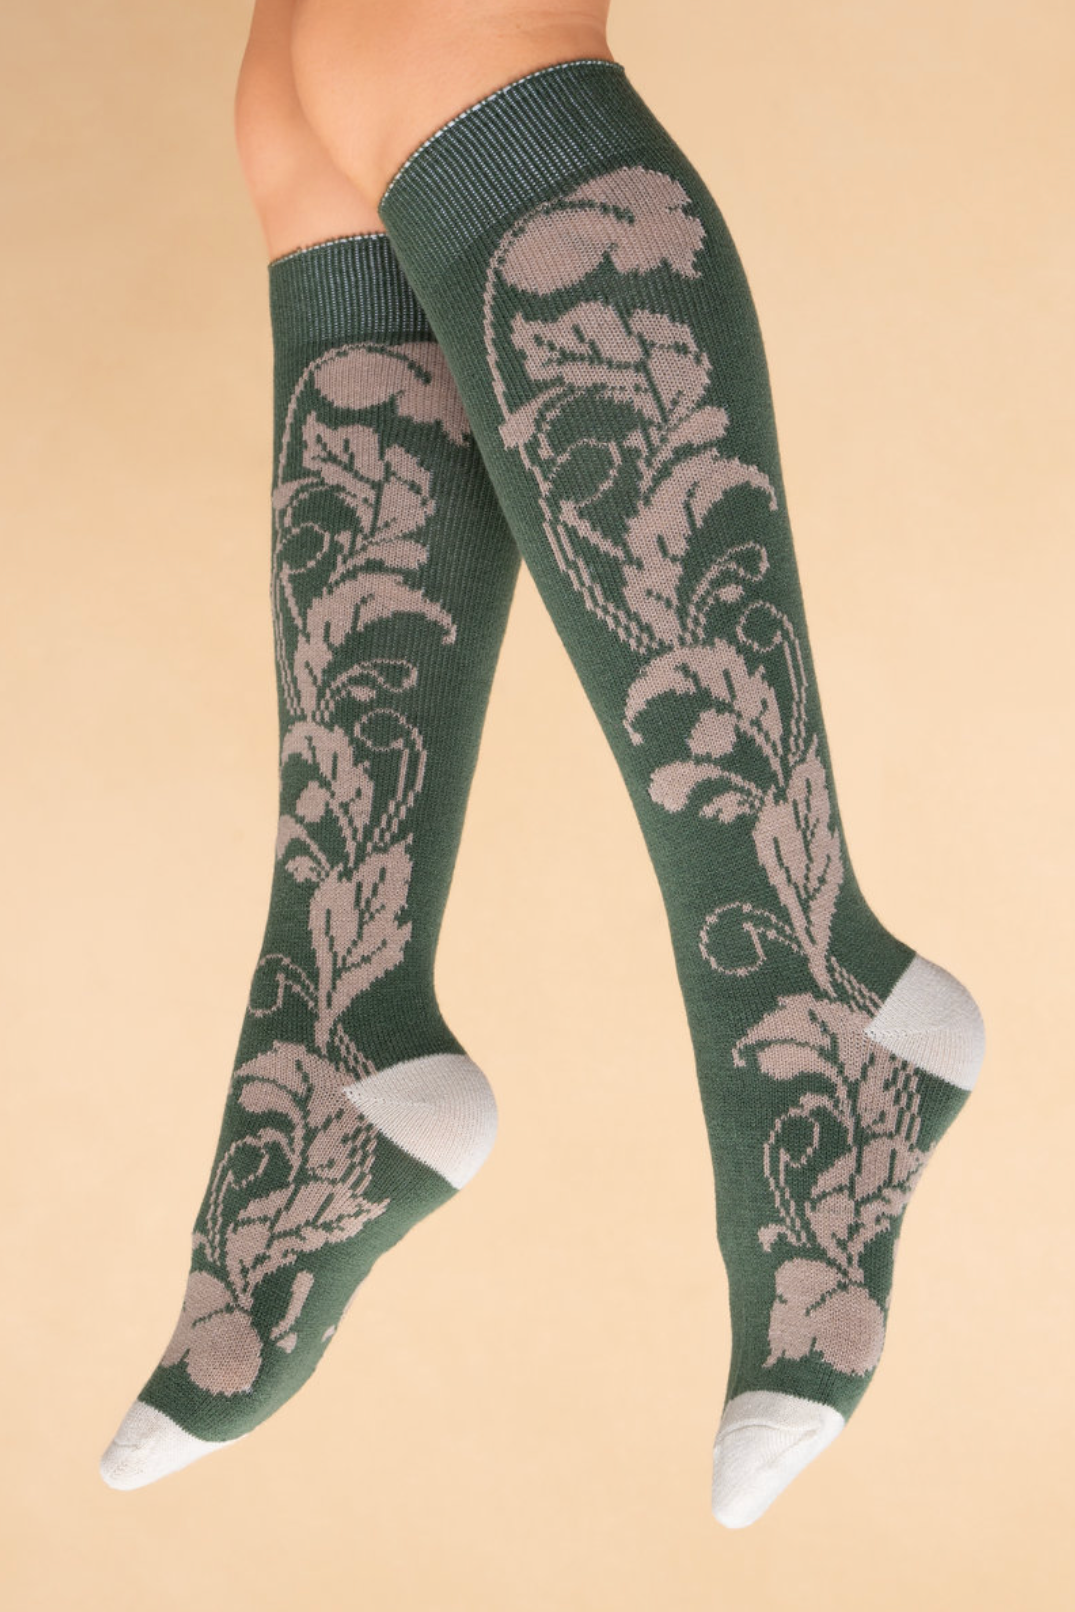 Powder UK ladies boot socks opulent floral knee high socks sage green 